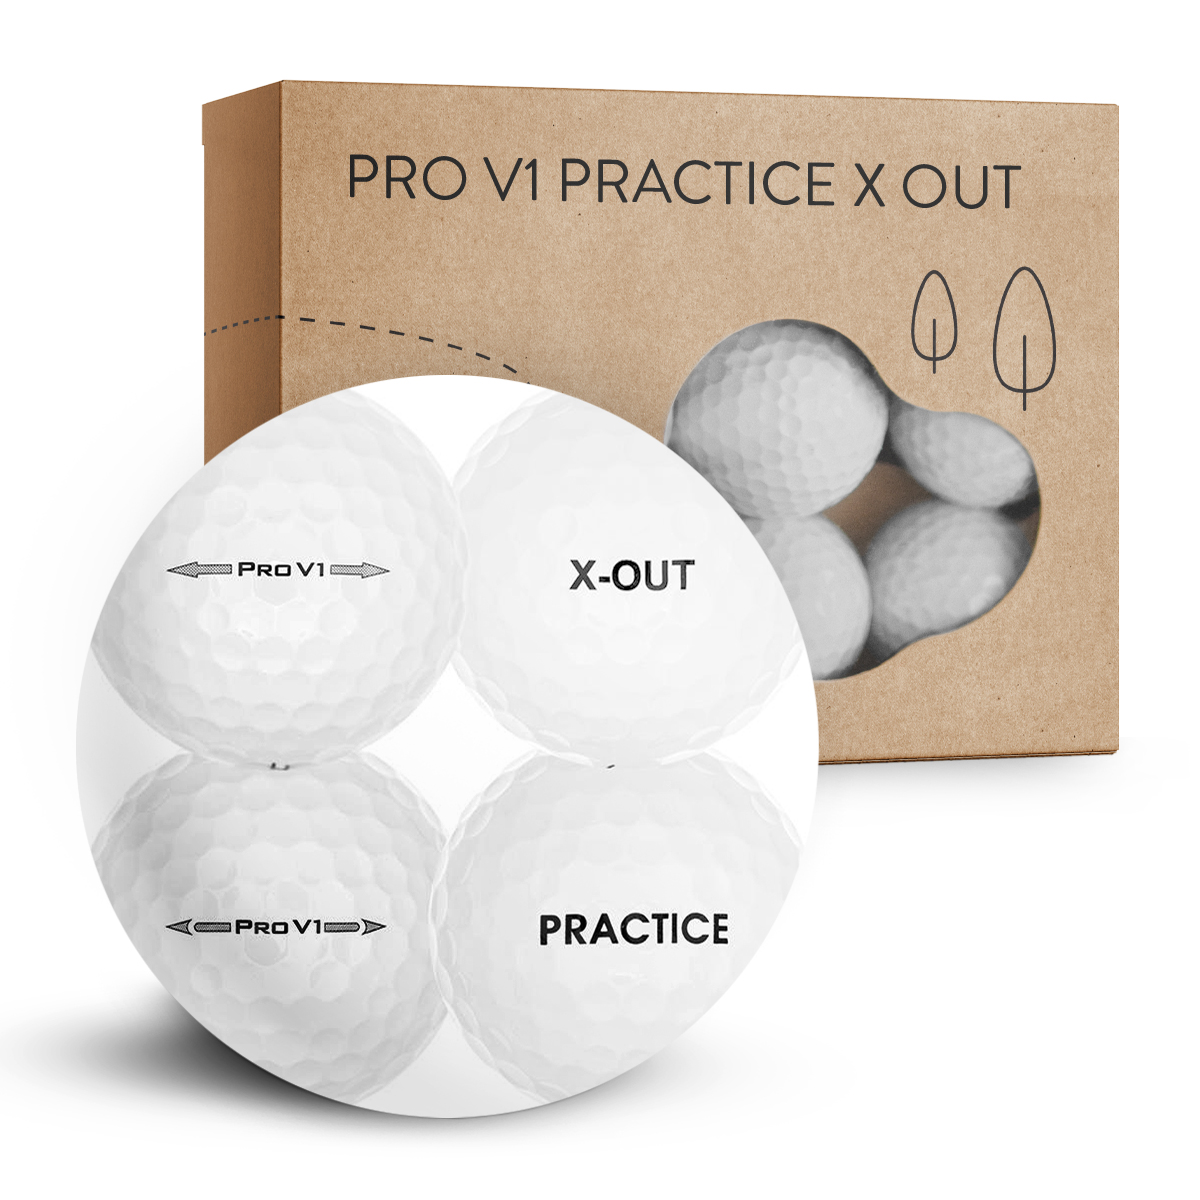 Pro V1 Practice/X-Out